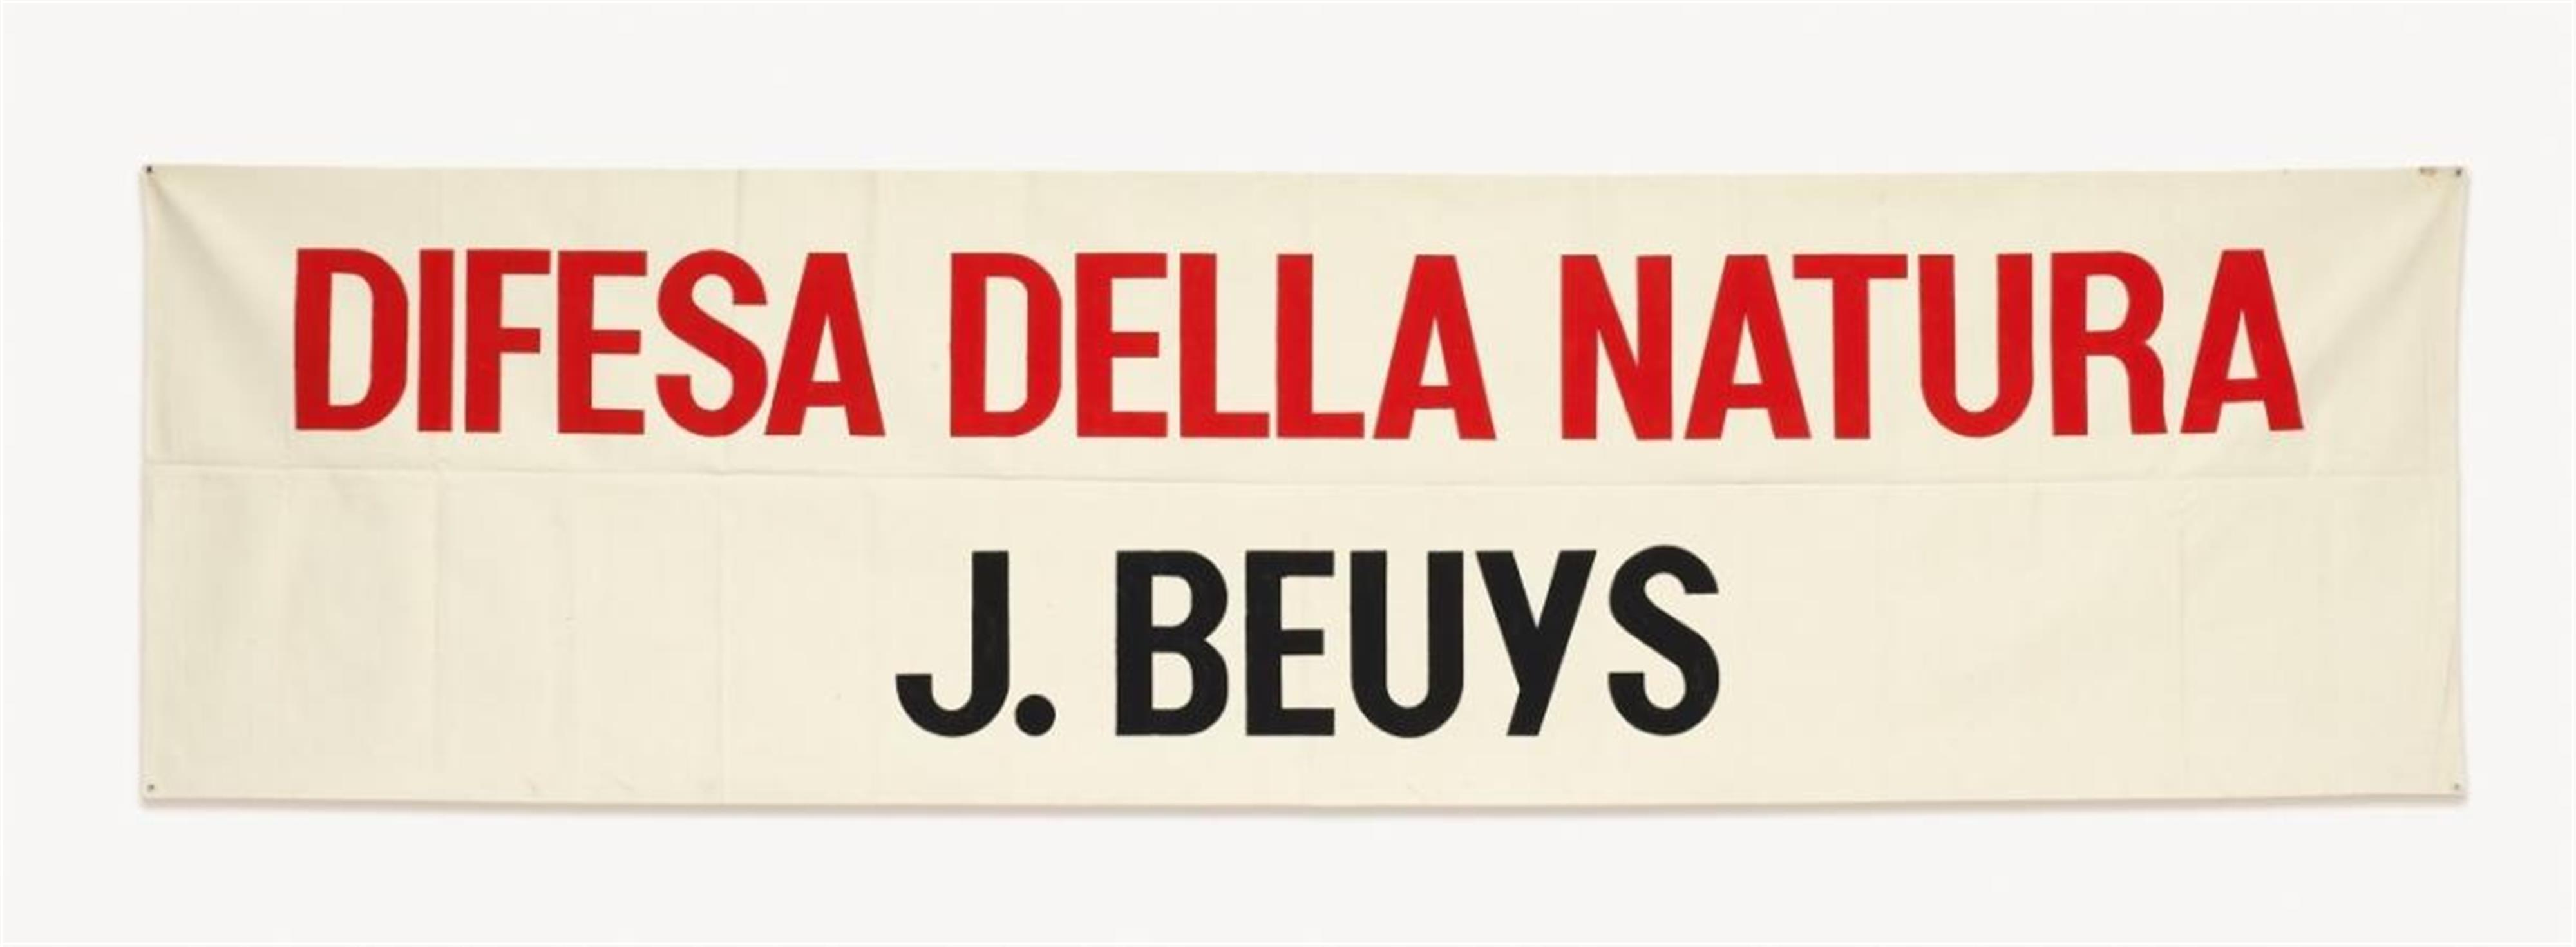 Joseph Beuys - Difesa della natura - image-1